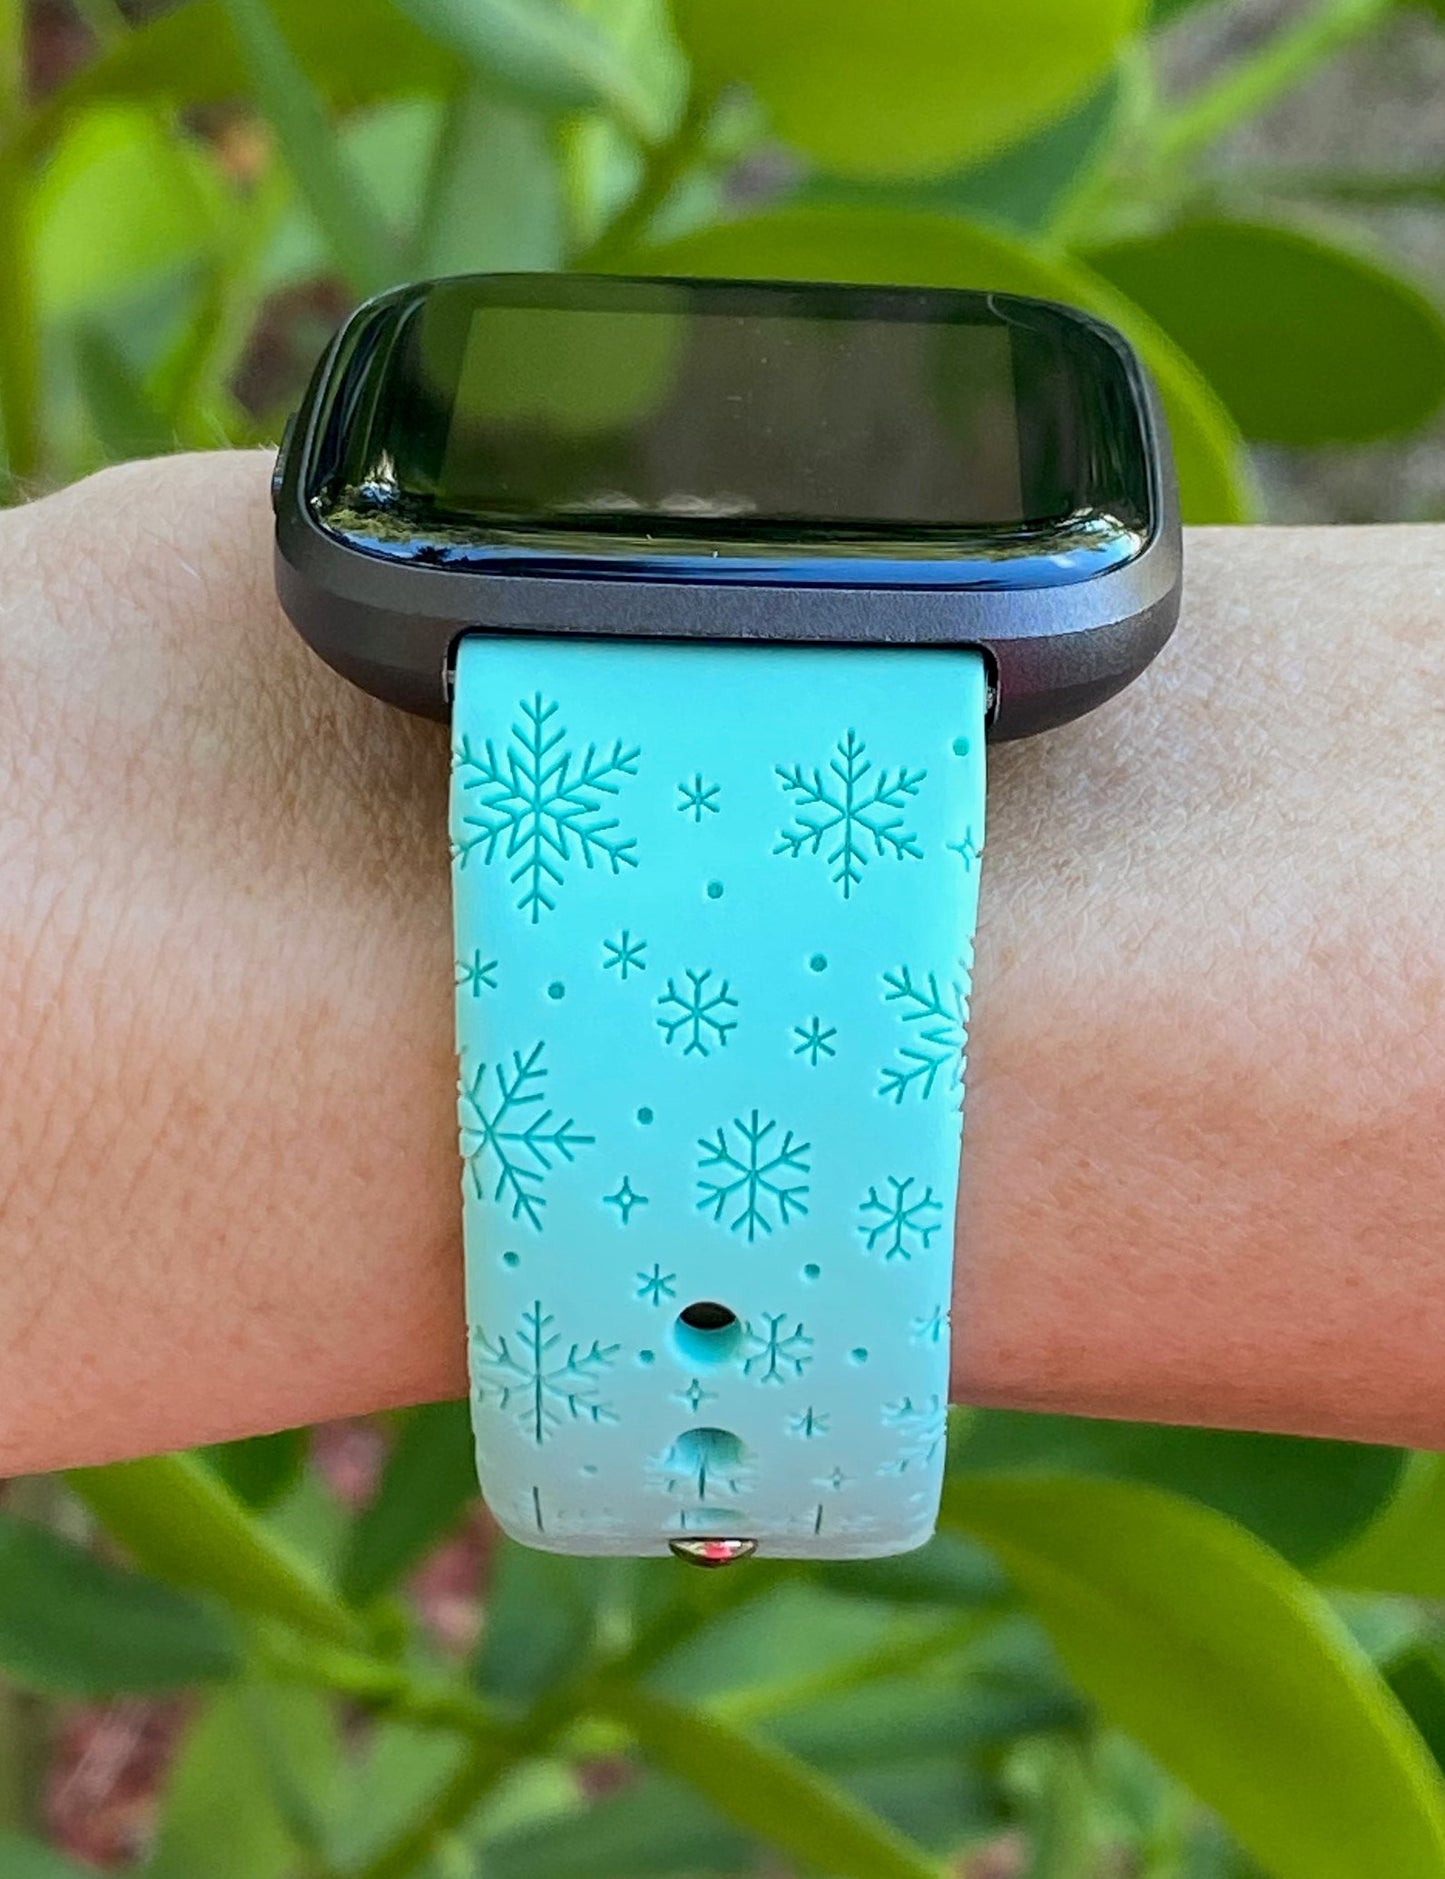 Snowflake Fitbit Versa 1/2 Watch Band